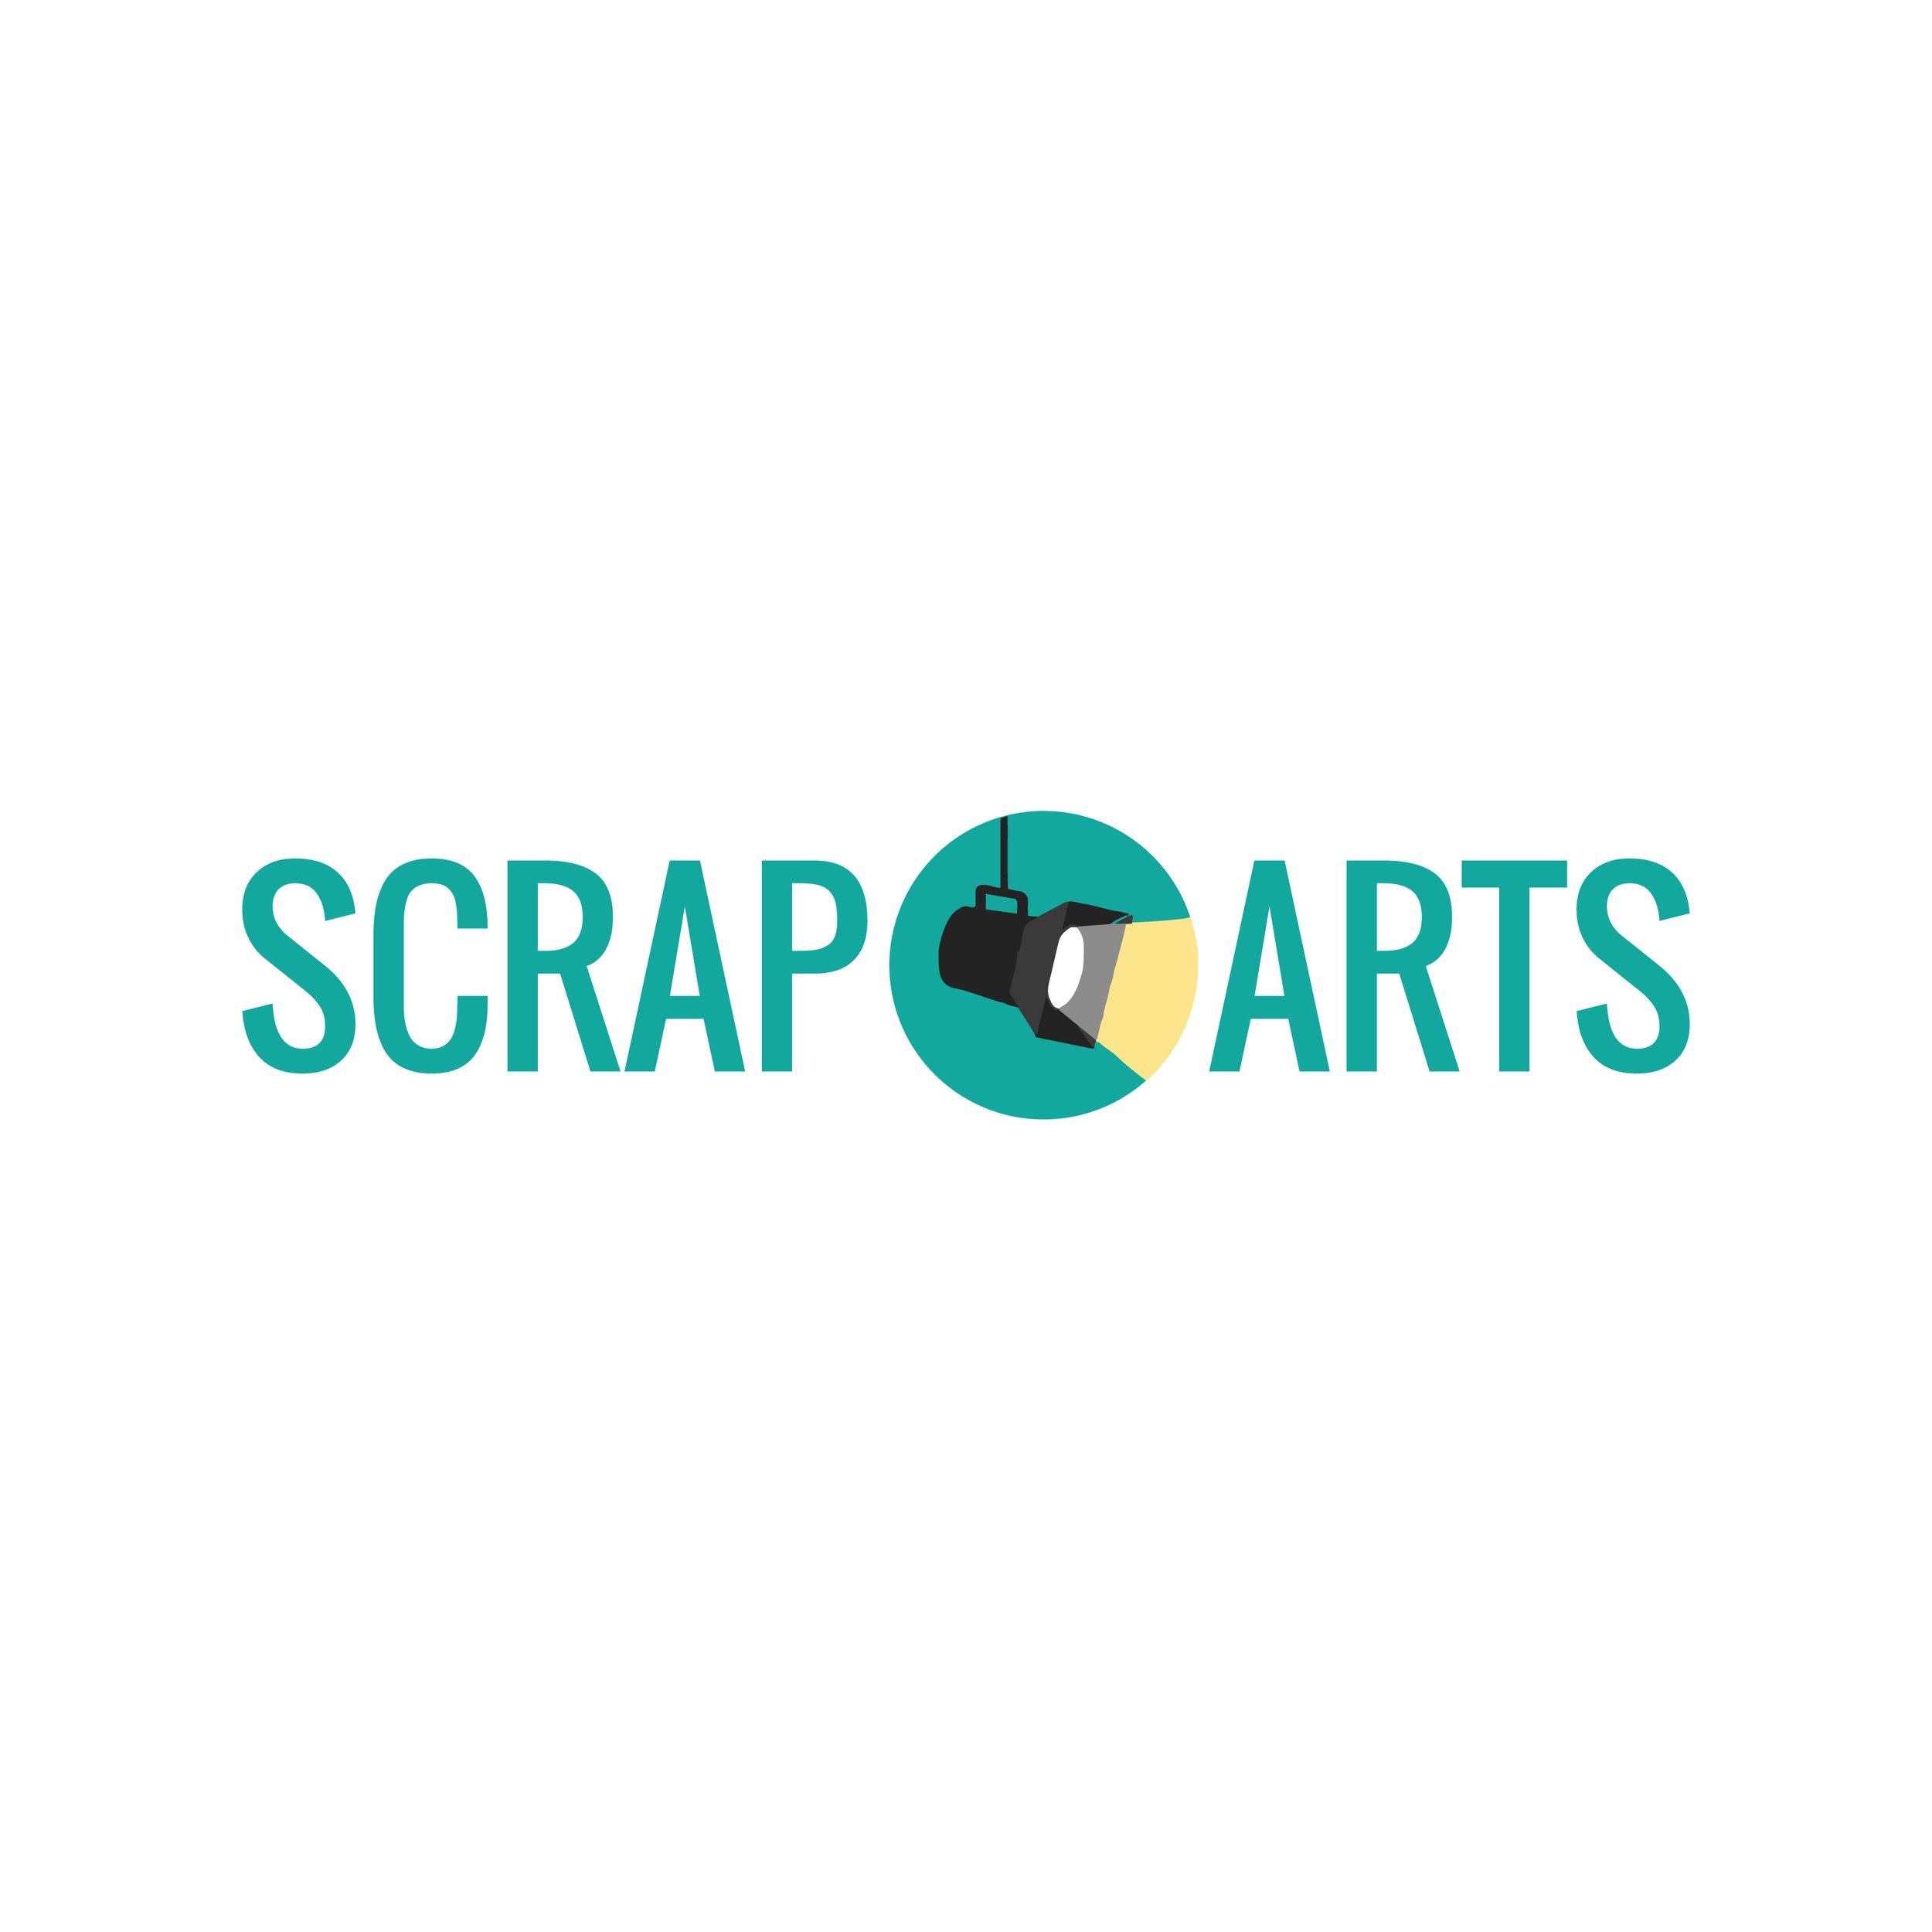 scrap-arts-final.jpg